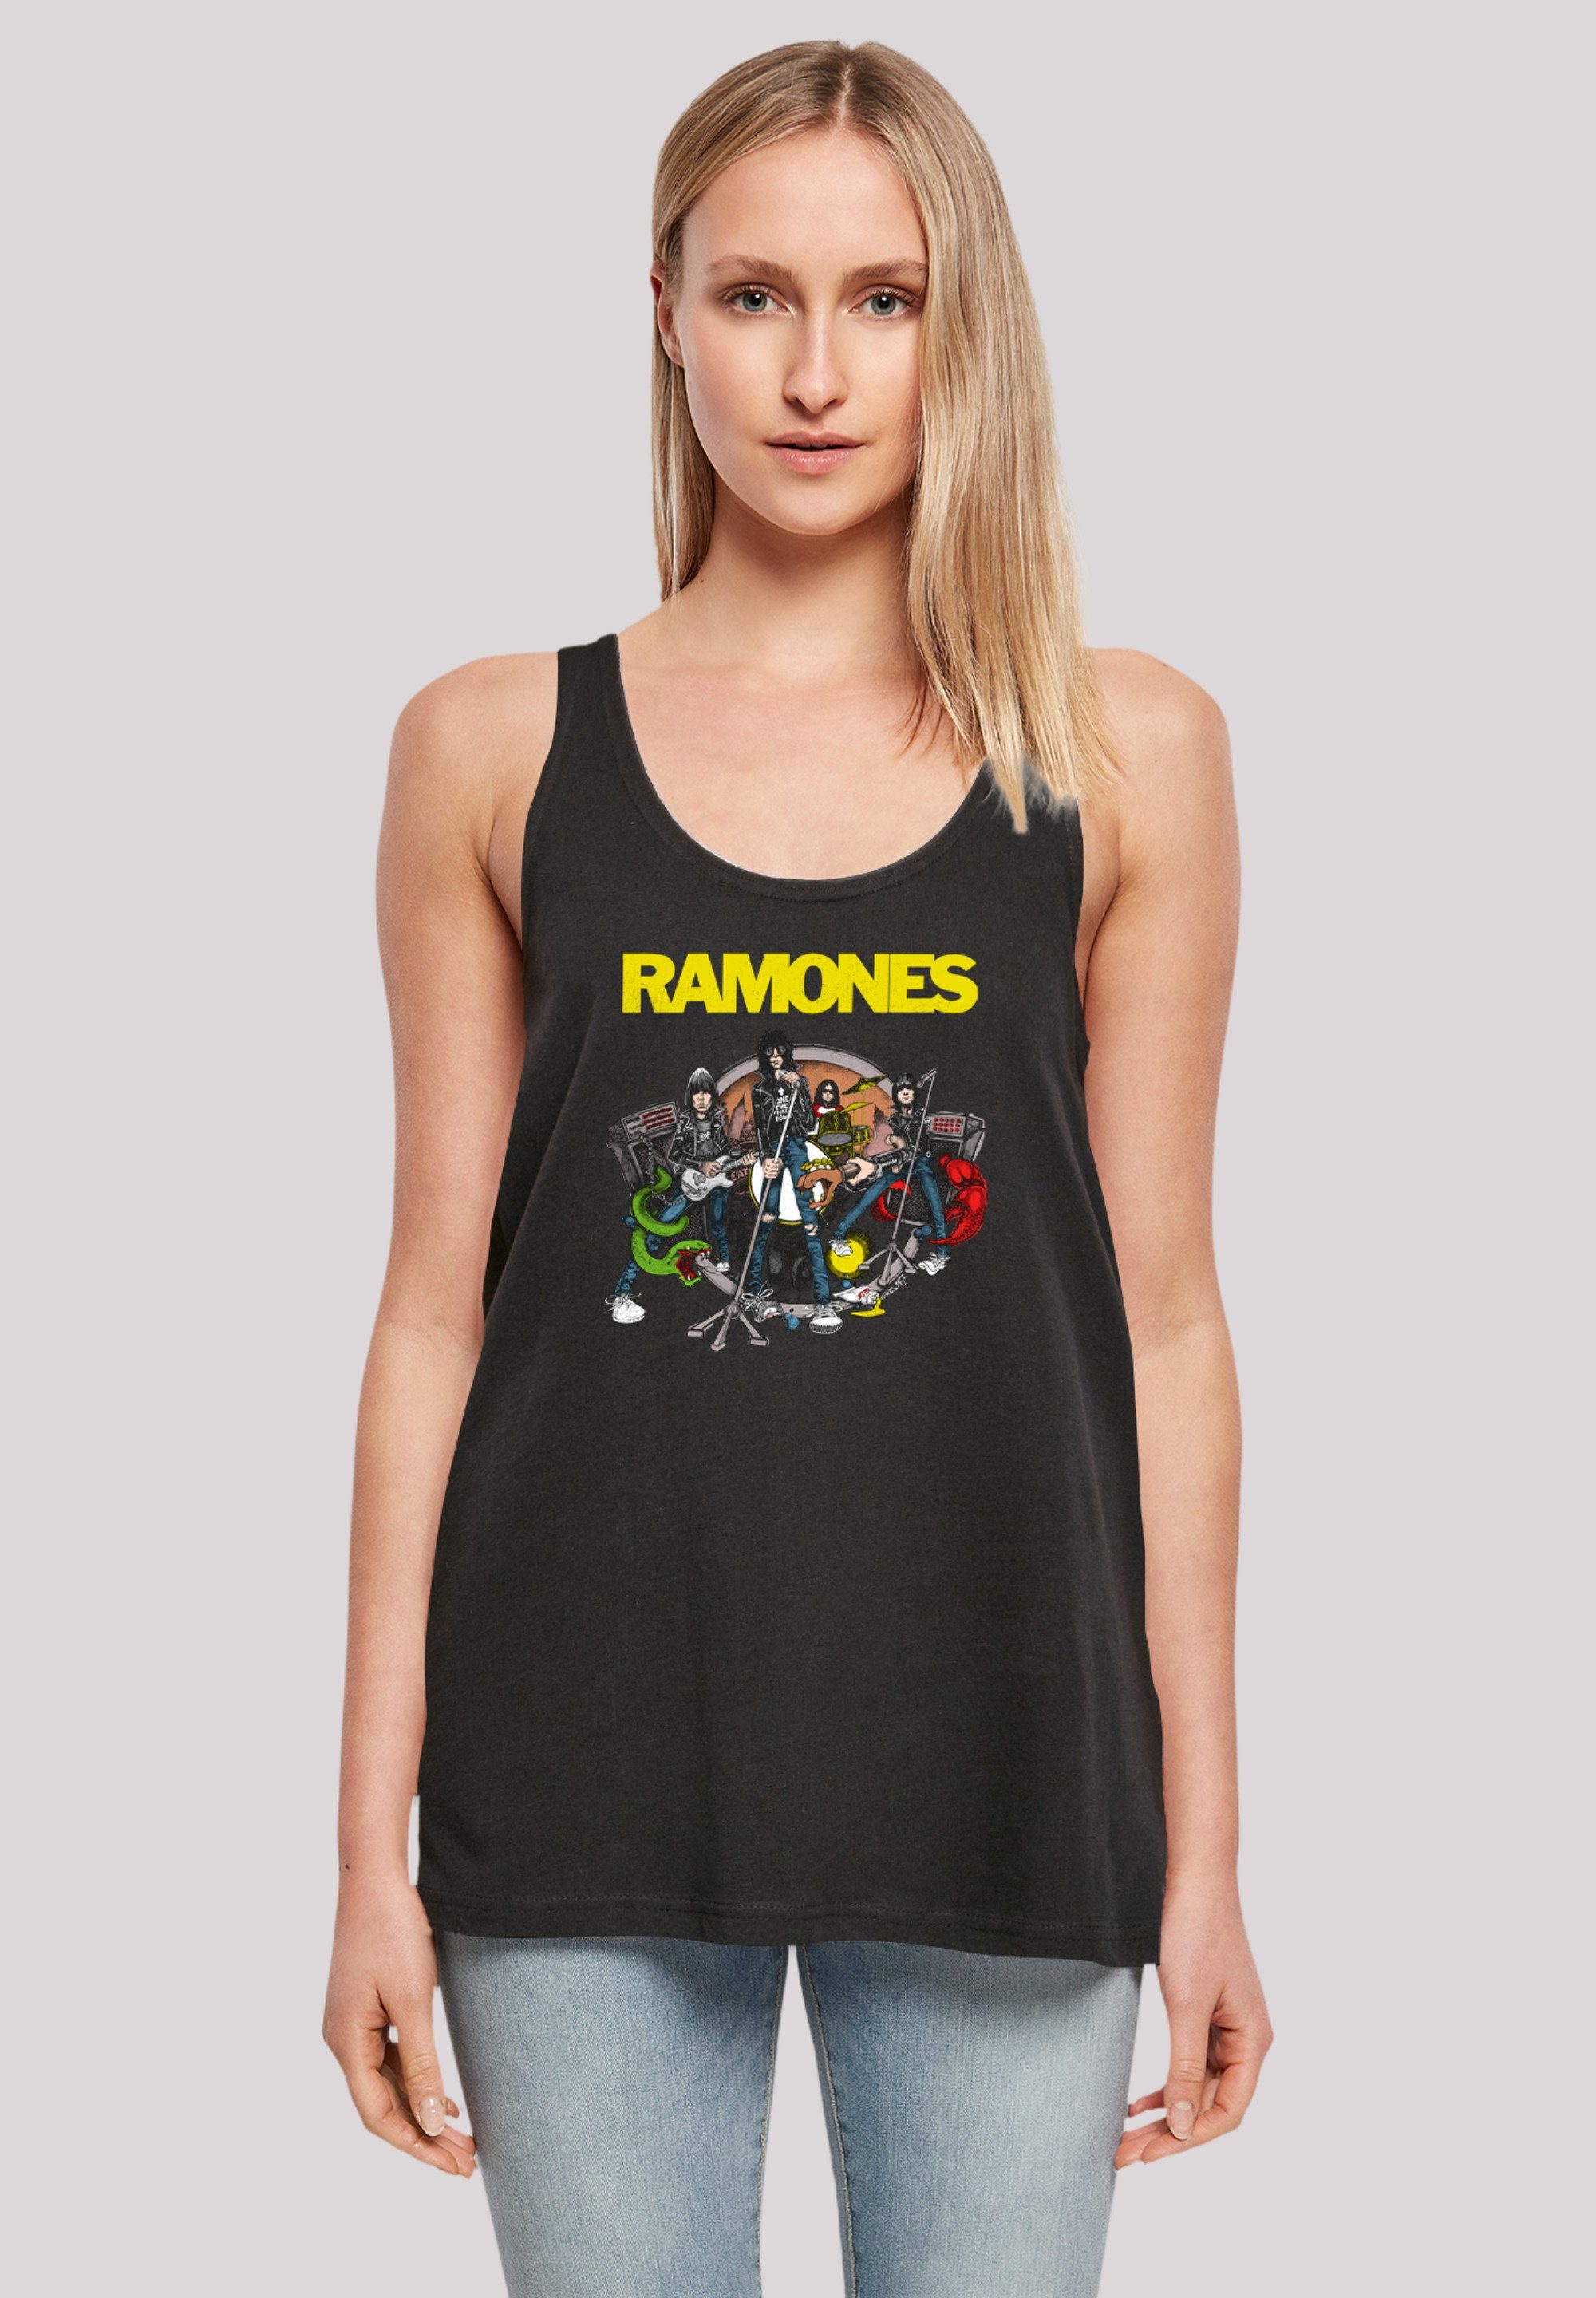 F4NT4STIC T-Shirt Ramones Rock Musik Band Road To Ruin Premium Qualität, Band, Rock-Musik